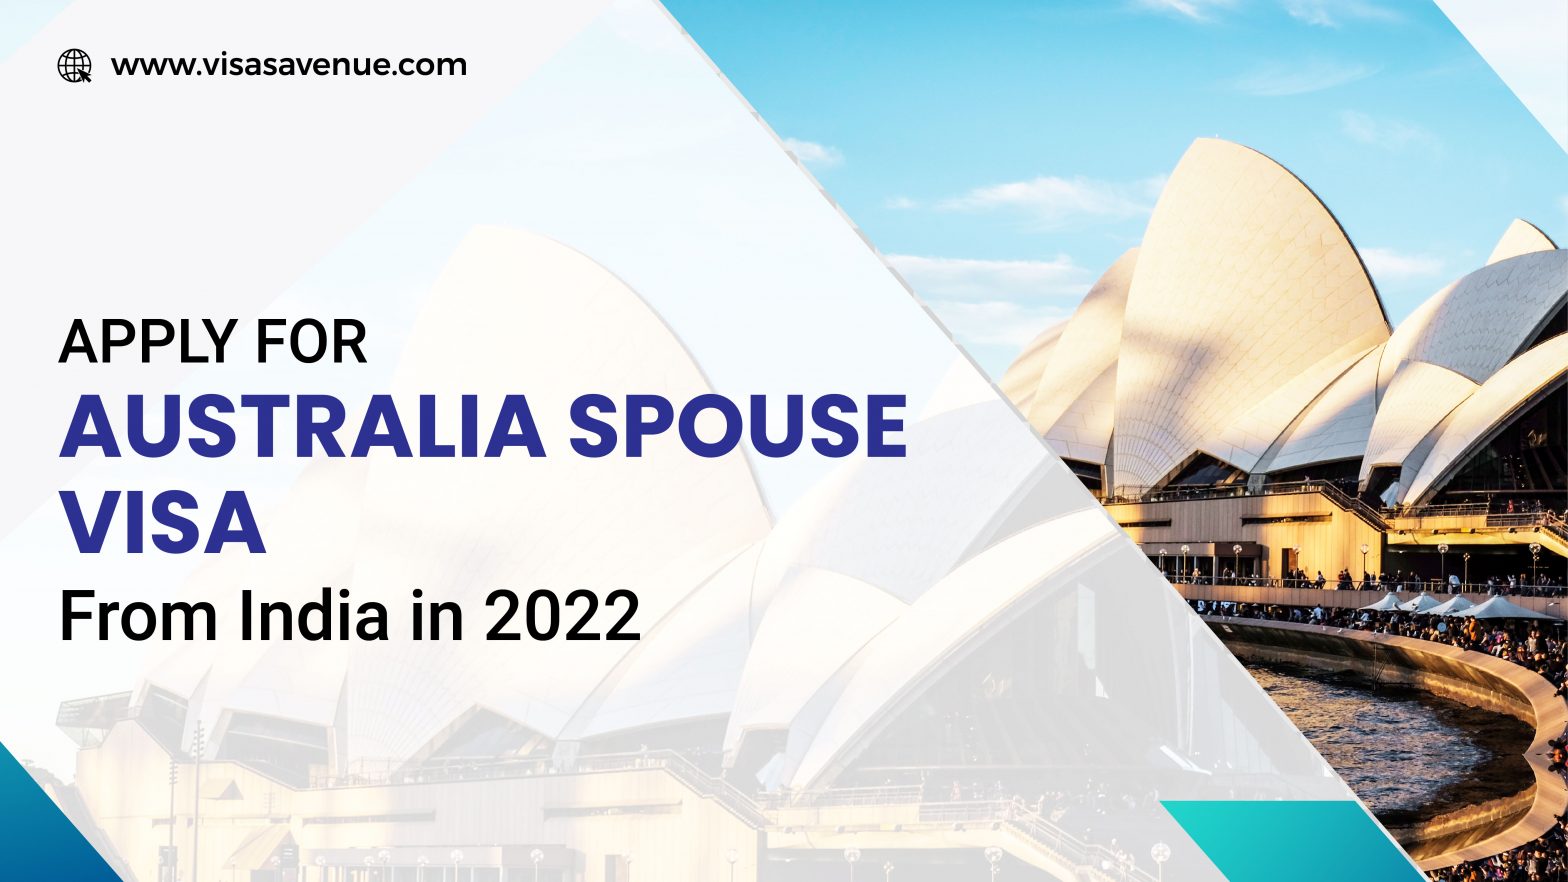 Australia Spouse Visa from India in 2022